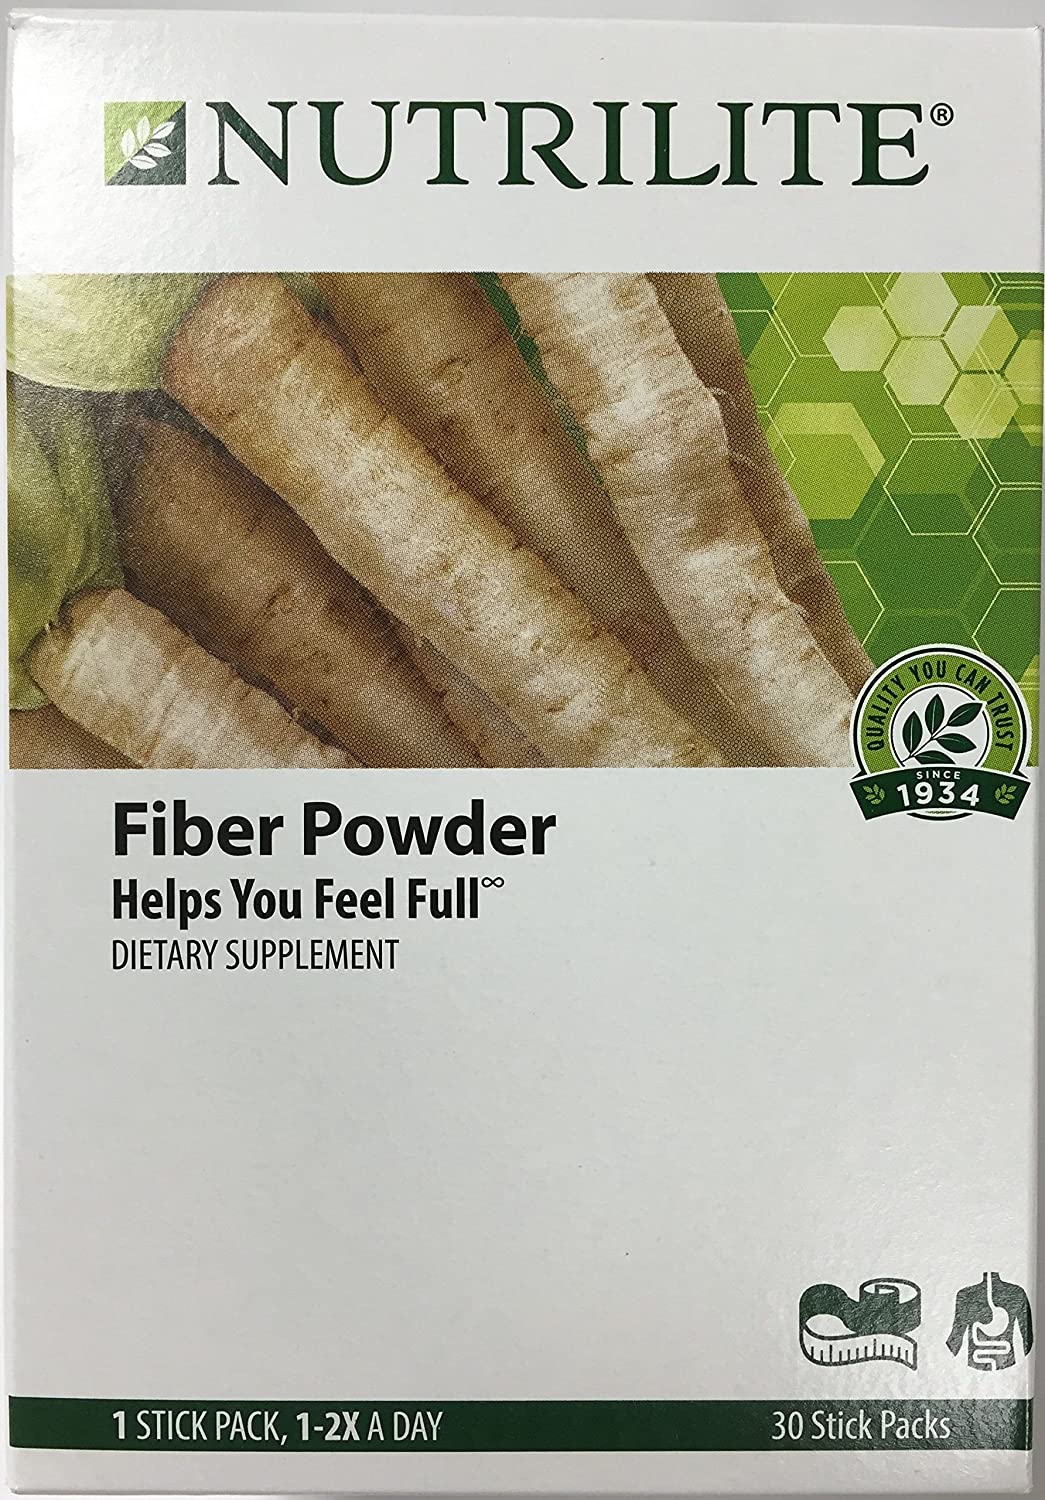 Nutrilite Fiber Powder 30 Stick Packs